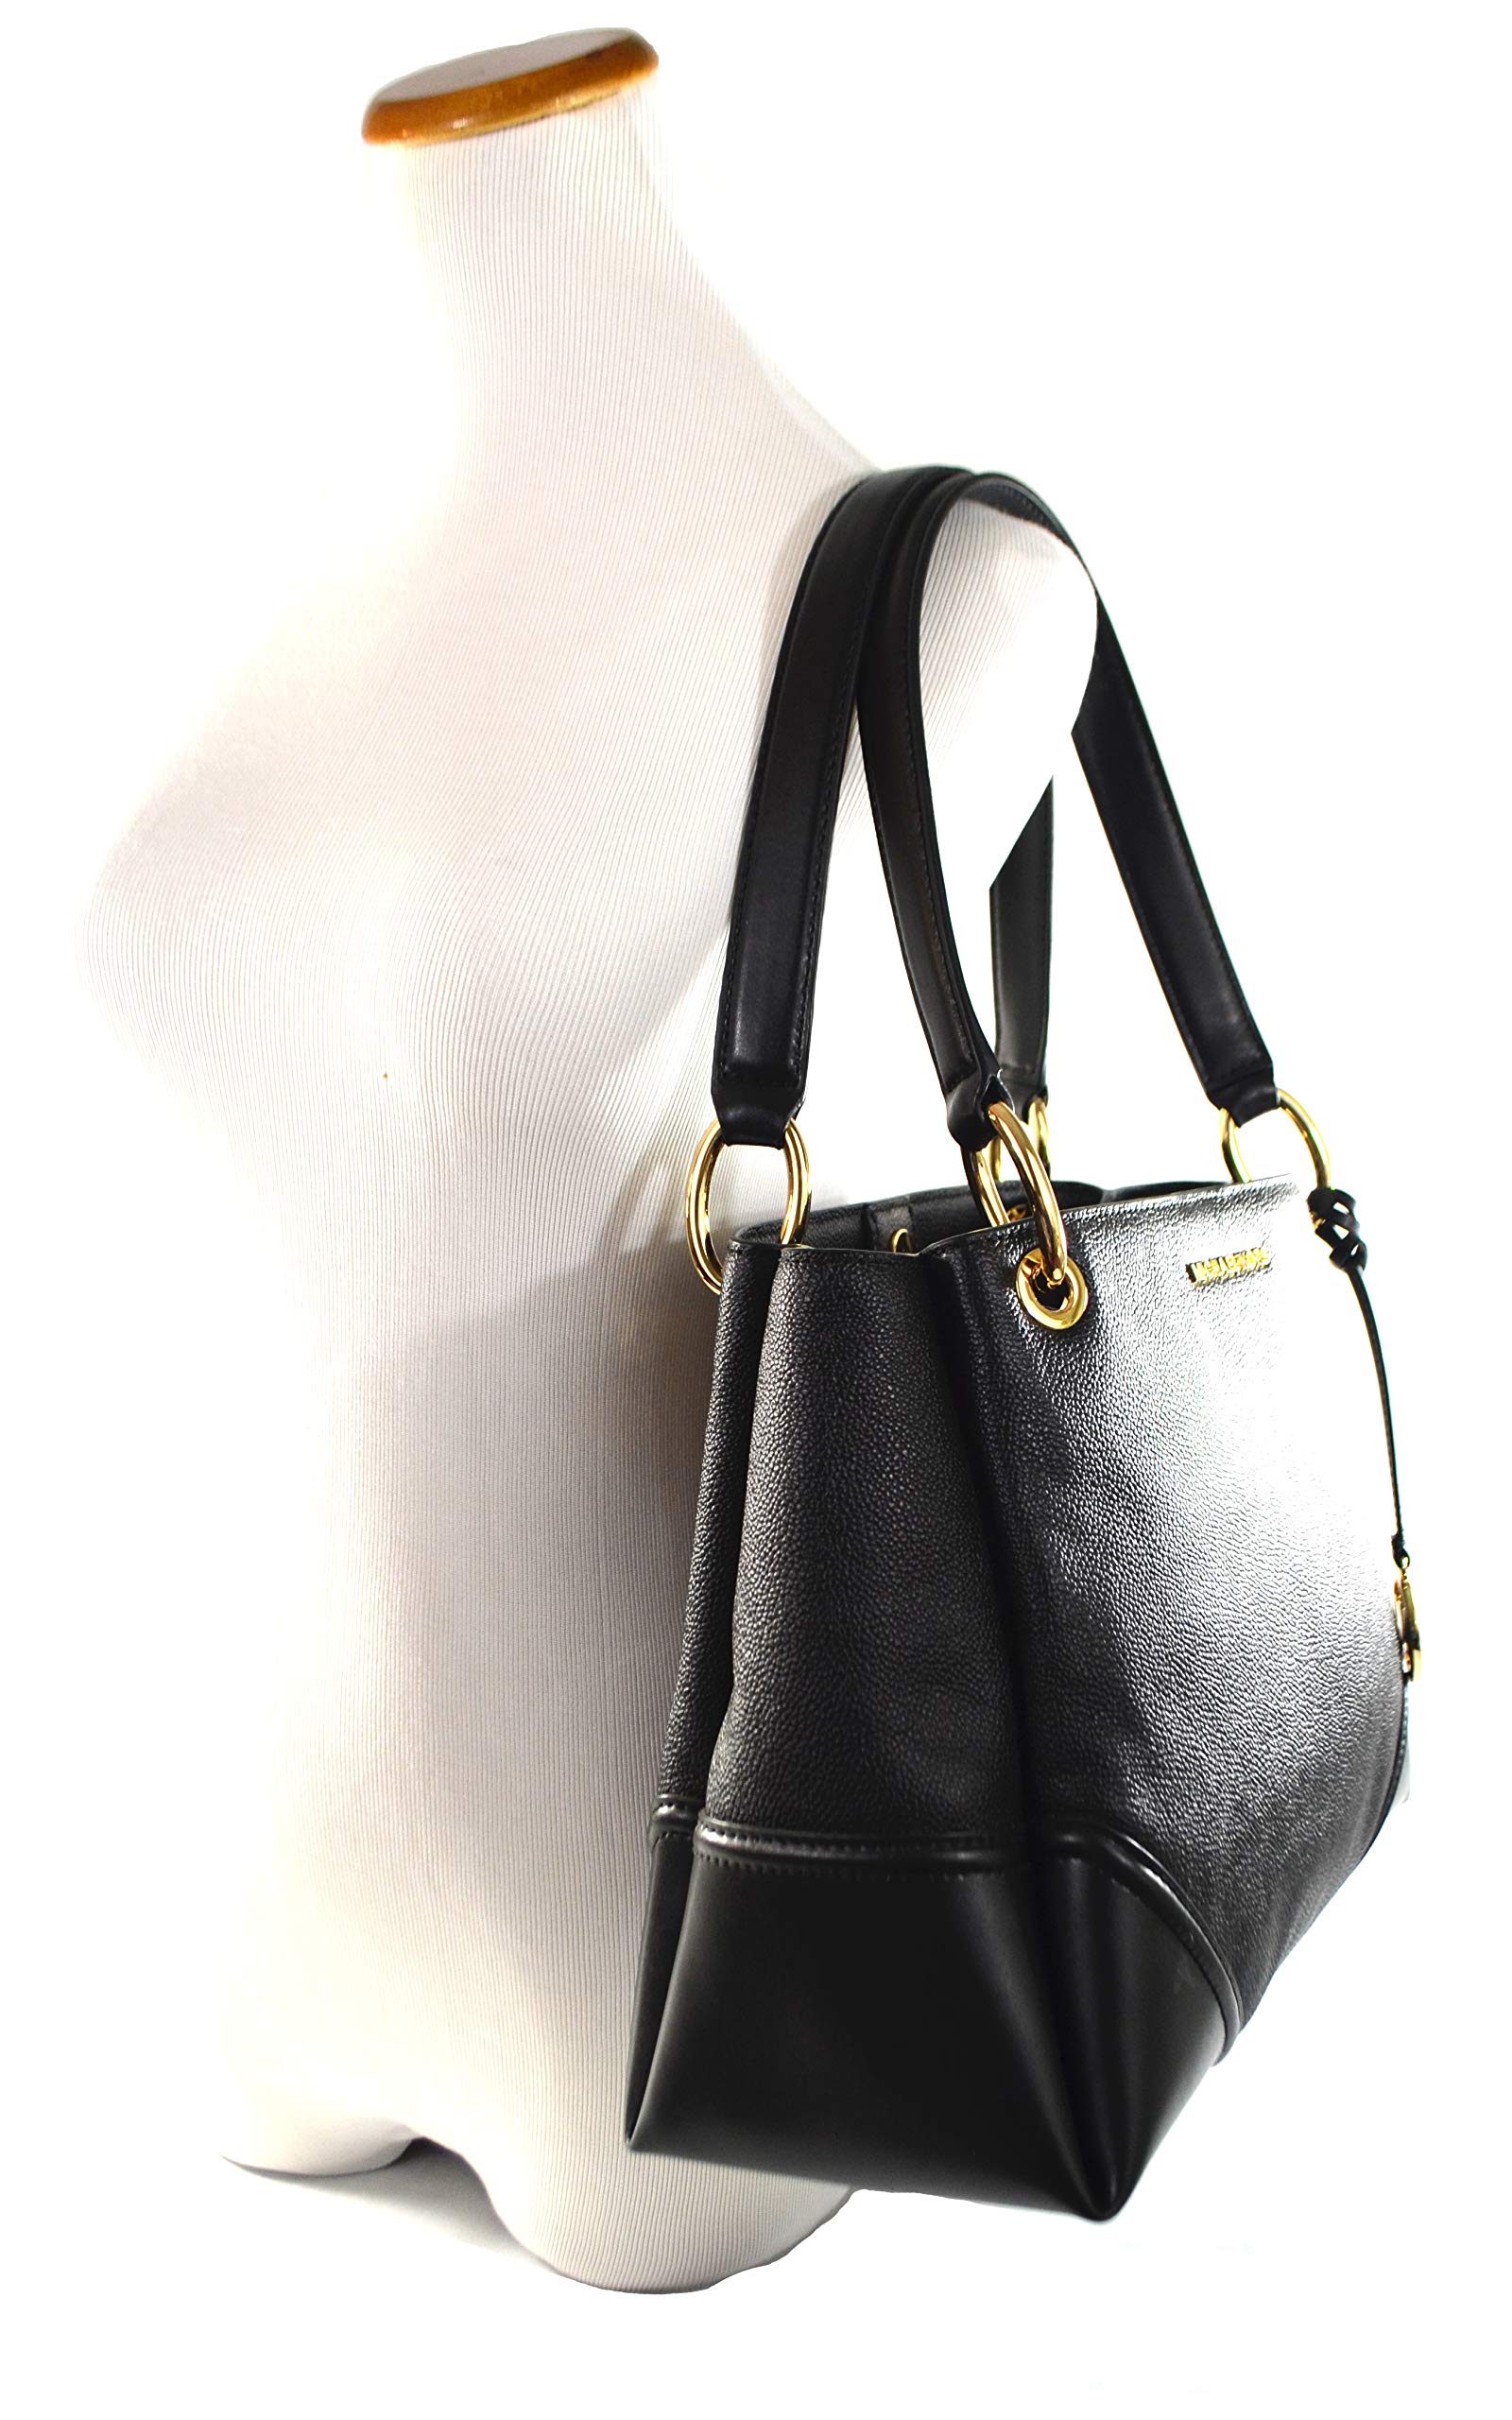 Michael Kors Women's Nicole Large Shoulder Bag Tote Purse Handbag